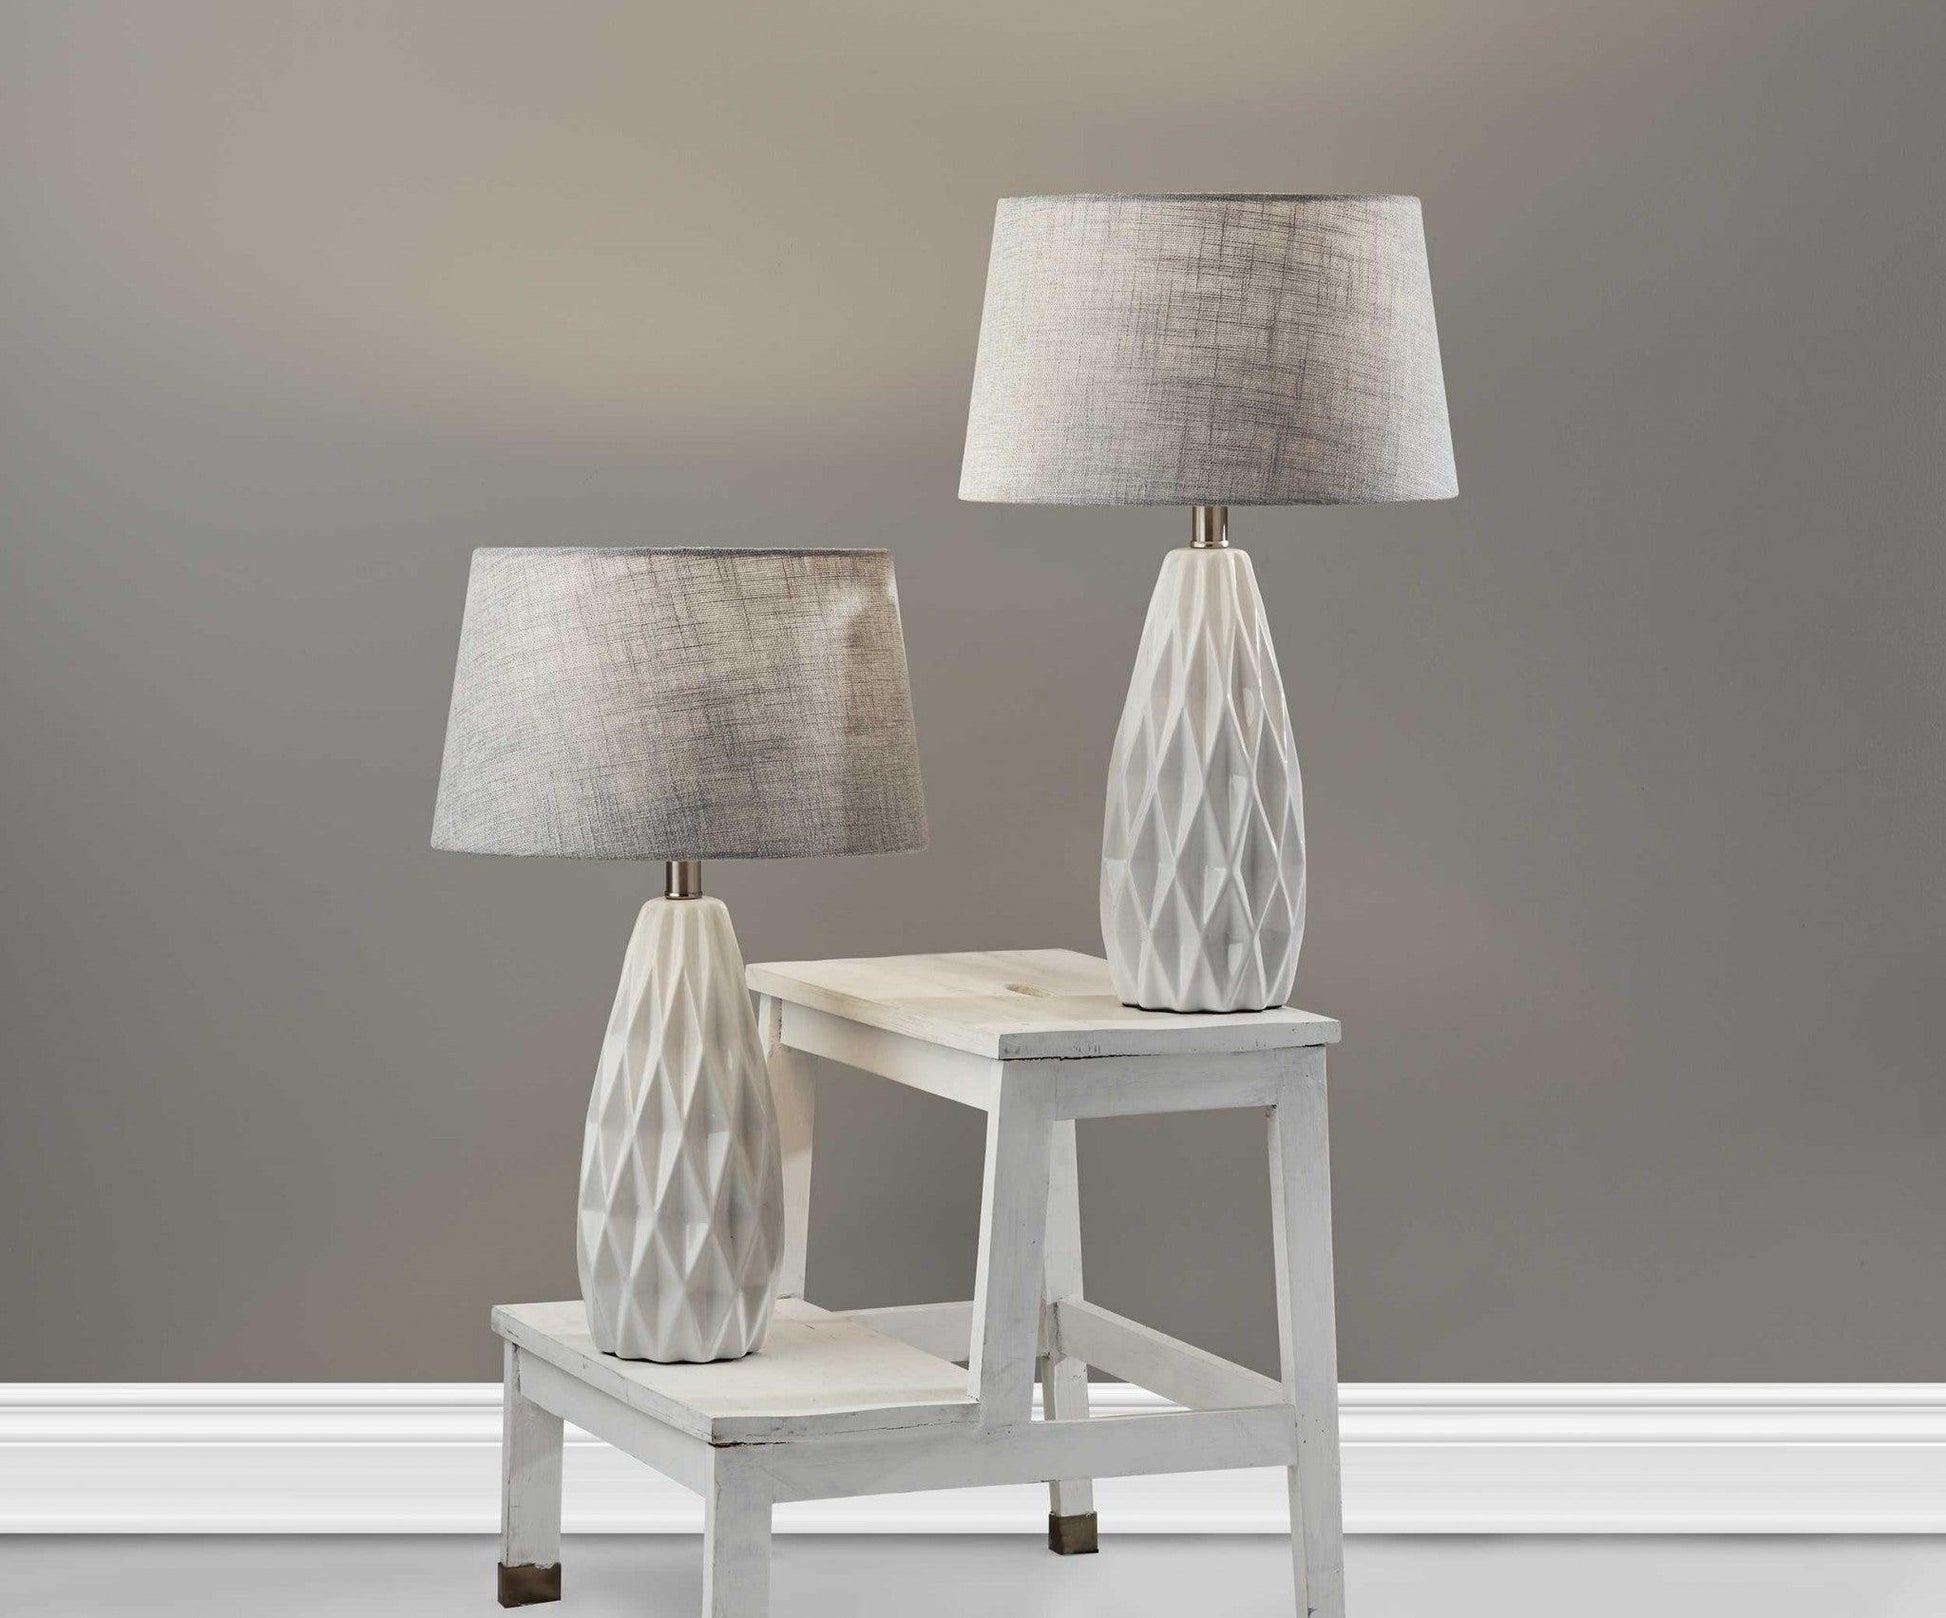 Set of 2 White Ceramic Geometric Base Table Lamp - AFS